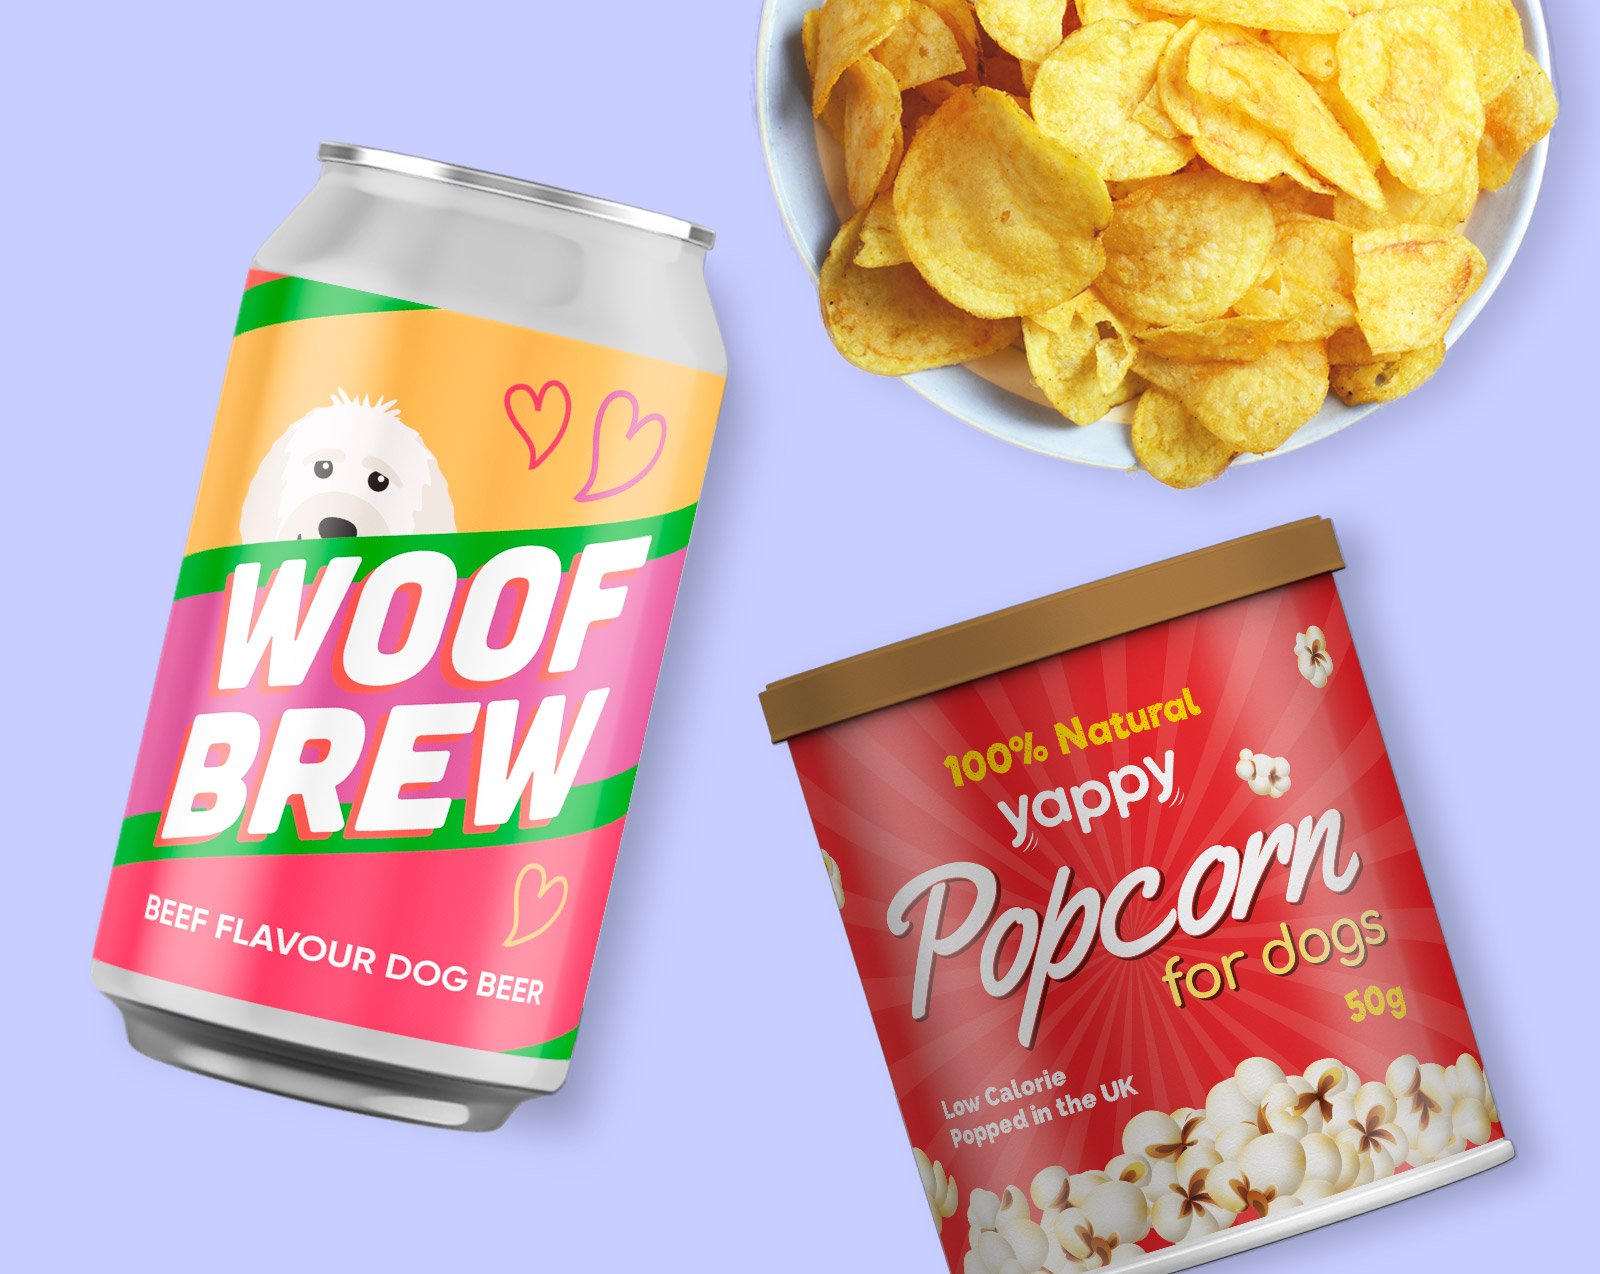 dog treats, yappy dog treats, yappy dog beer, dog beer treat bundle, popcorn for dogs